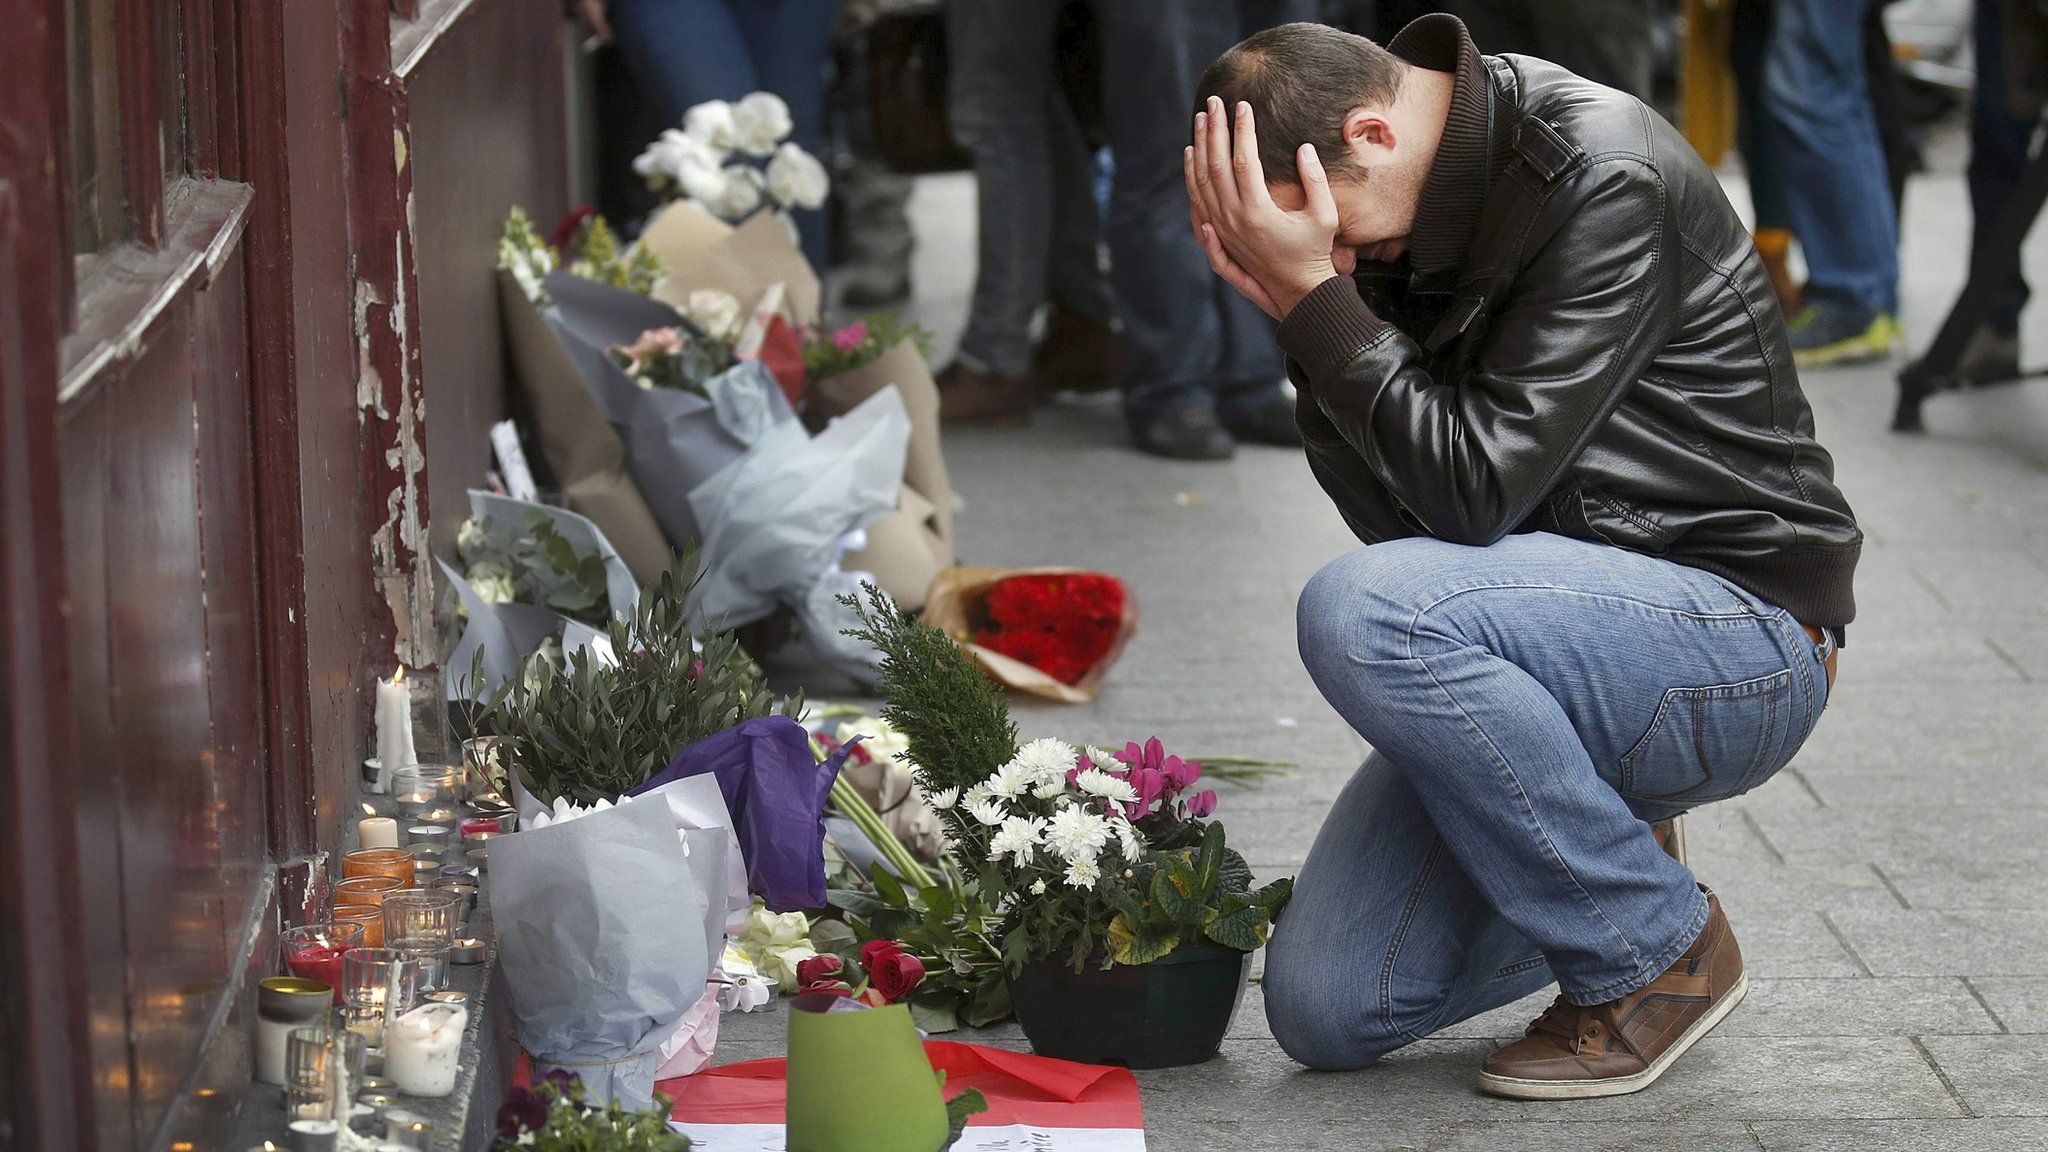 Фото после теракта. Последствия терроризма. Люди плачут после теракта.